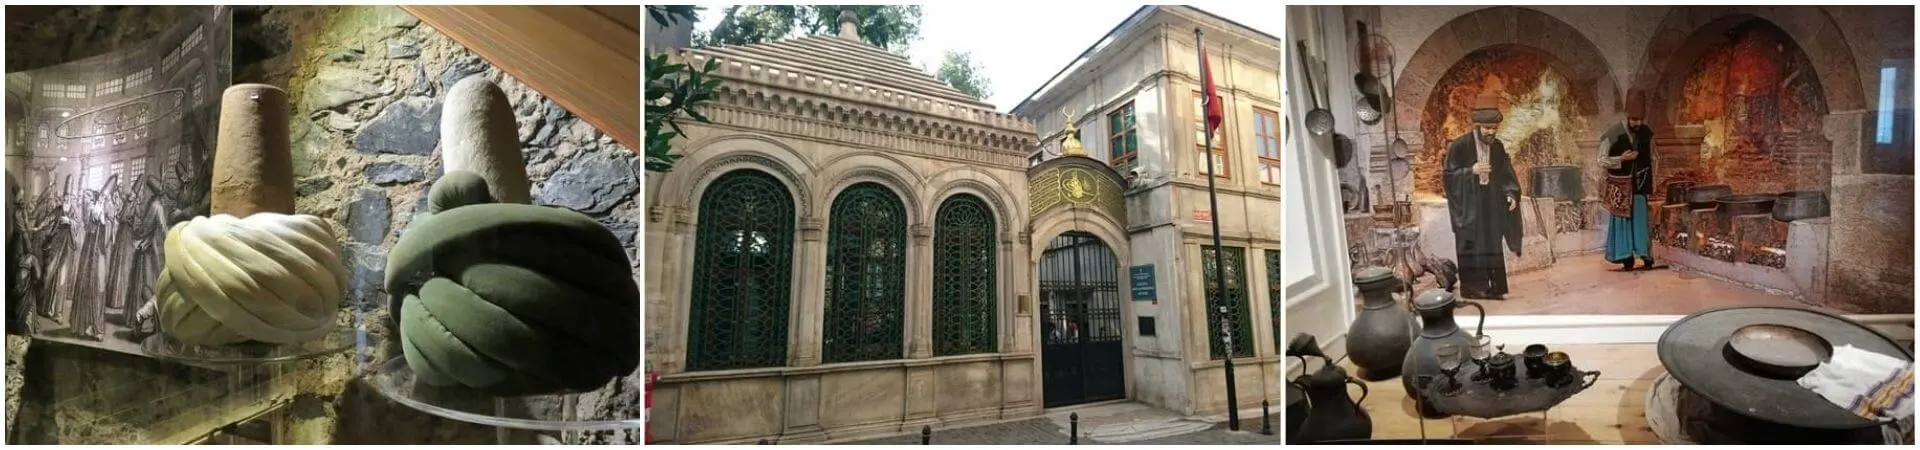 Galata Mevlevi Lodge Museum Entrance